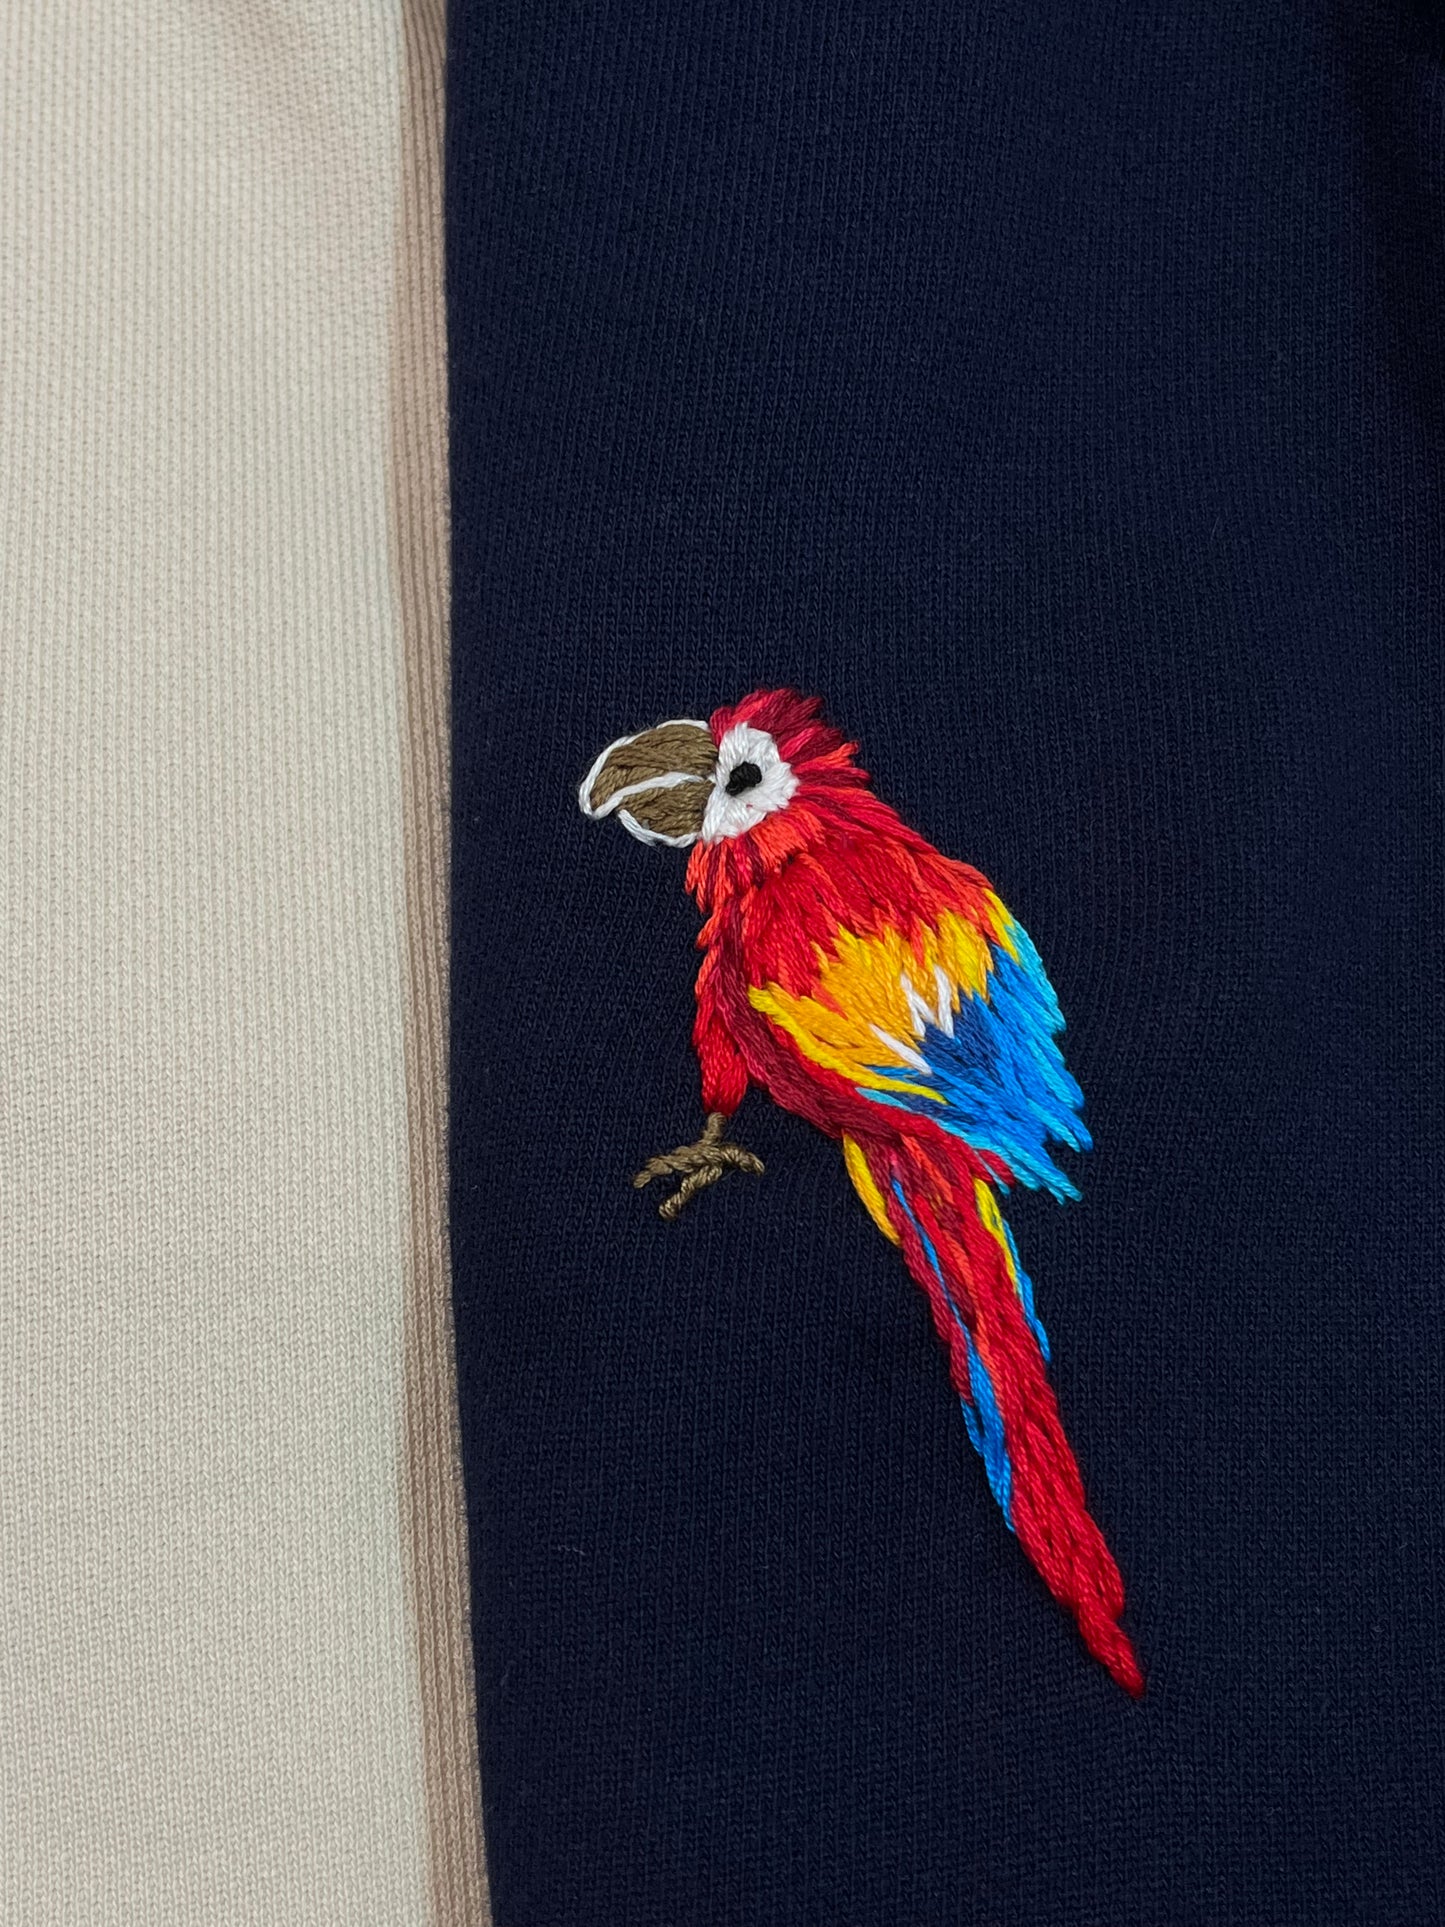 Cruise Short - Scarlet Macaw